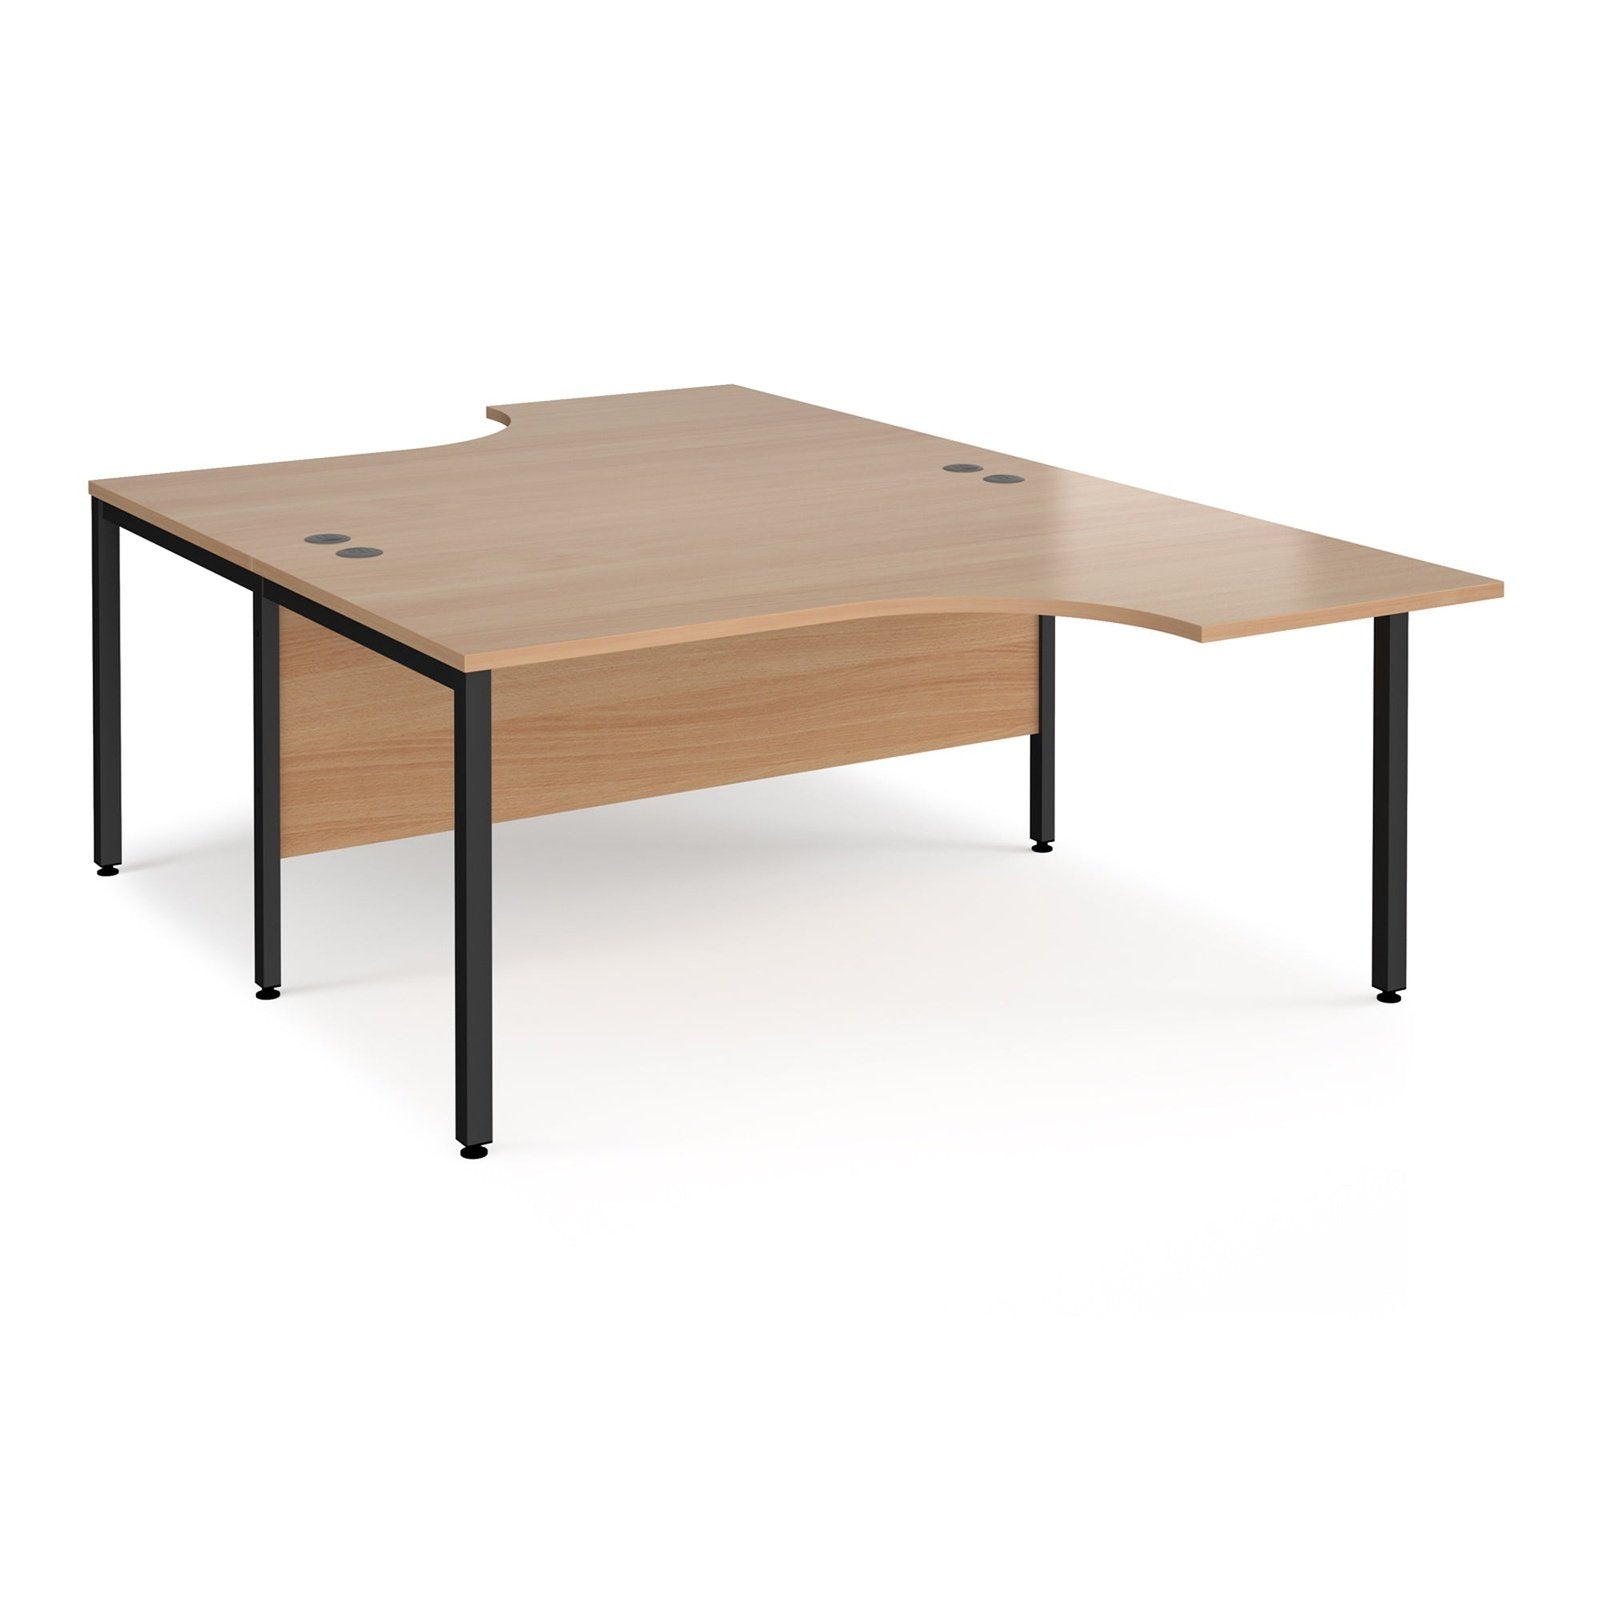 Maestro 25 bench leg to back ergonomic desks - Office Products Online